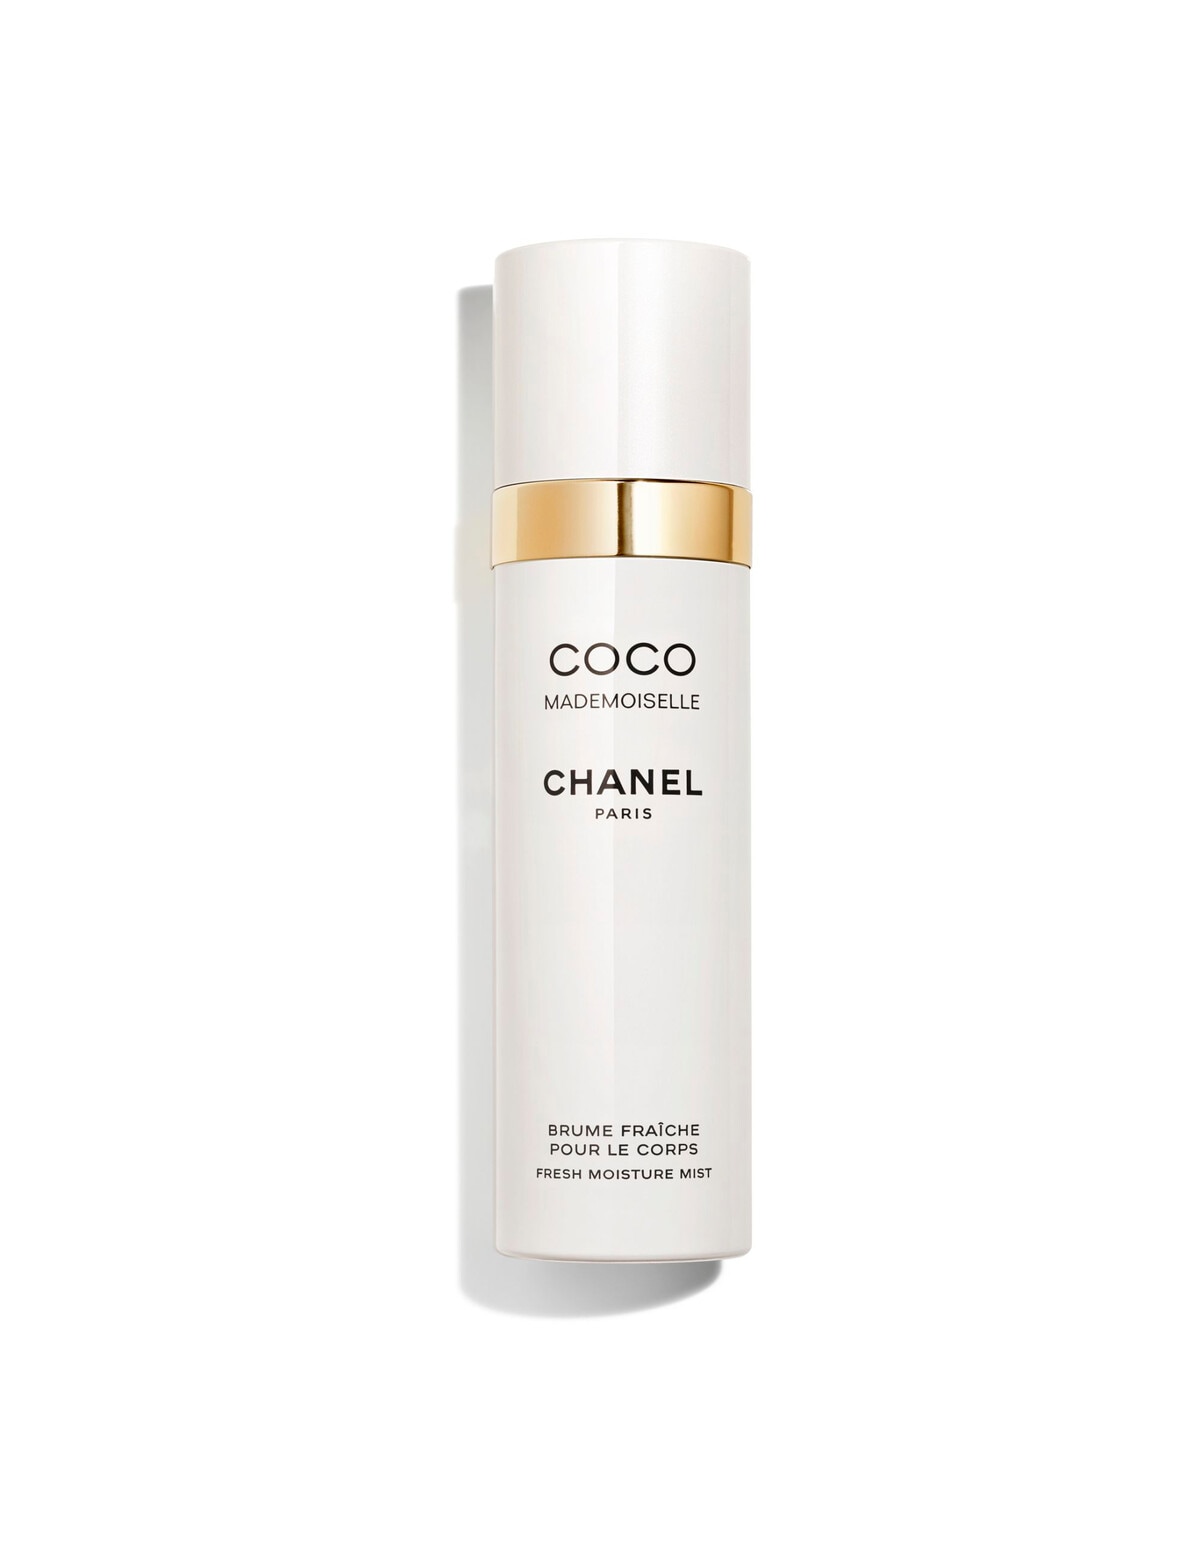 Chanel Coco Mademoiselle - Body Cream